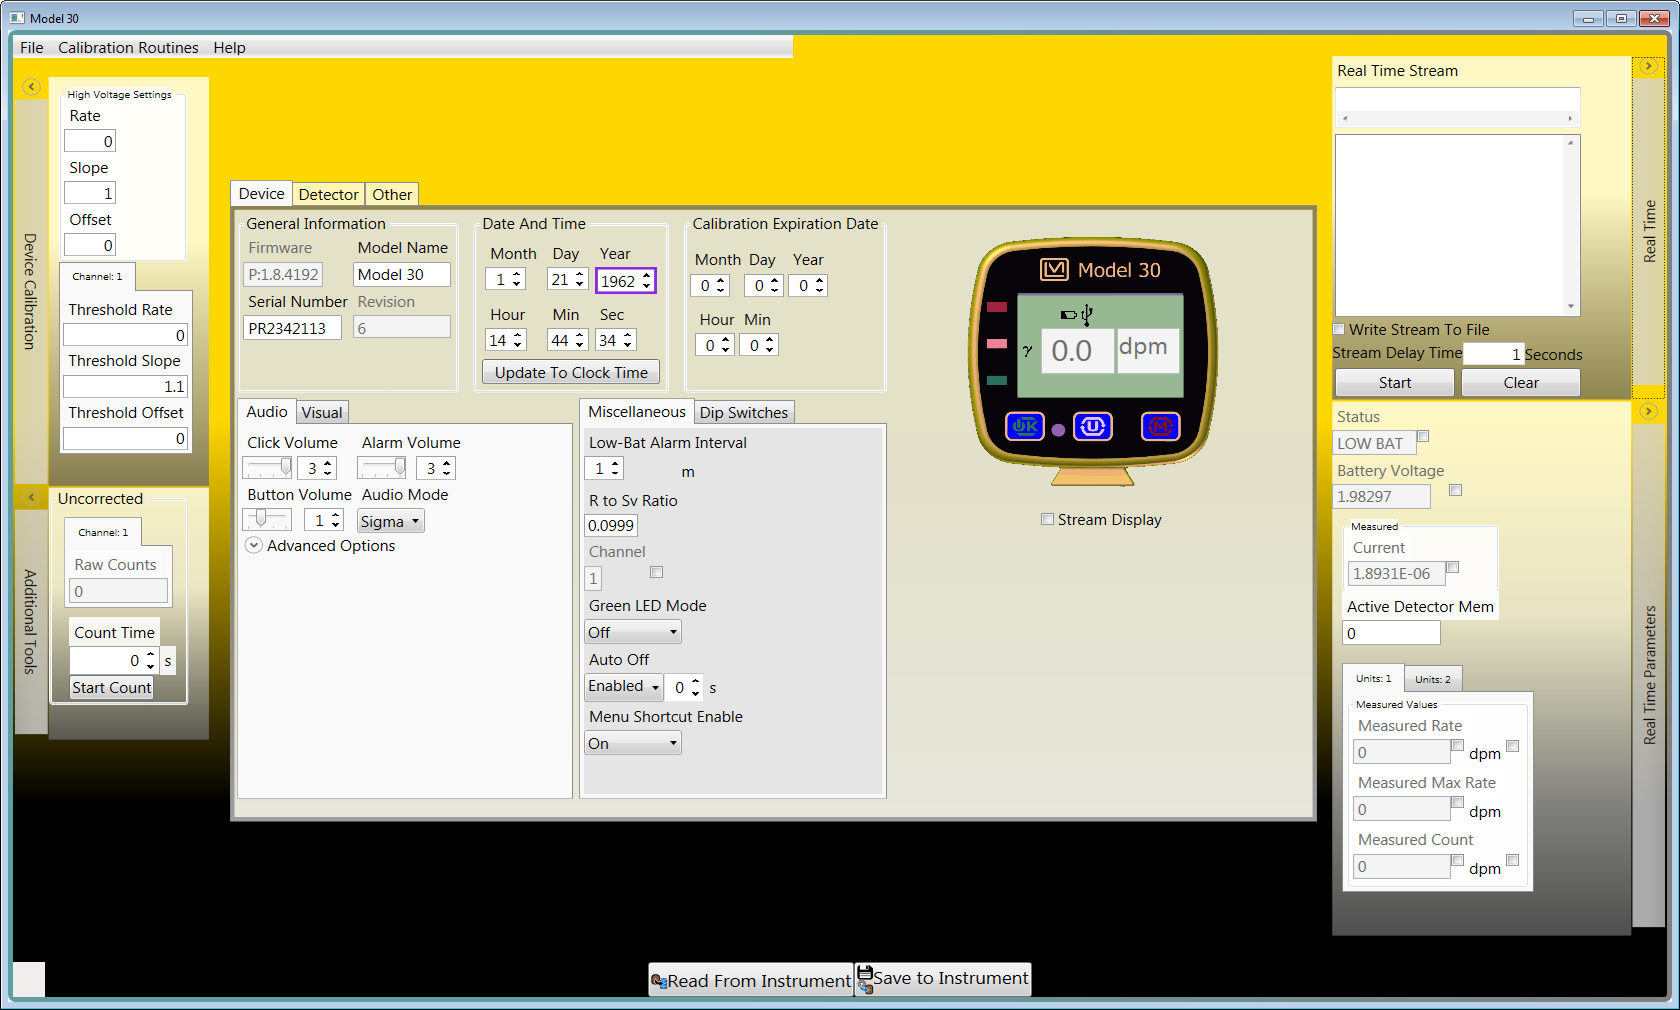 Lumic 1 Calibration Software Screenshot for Model 30 Family